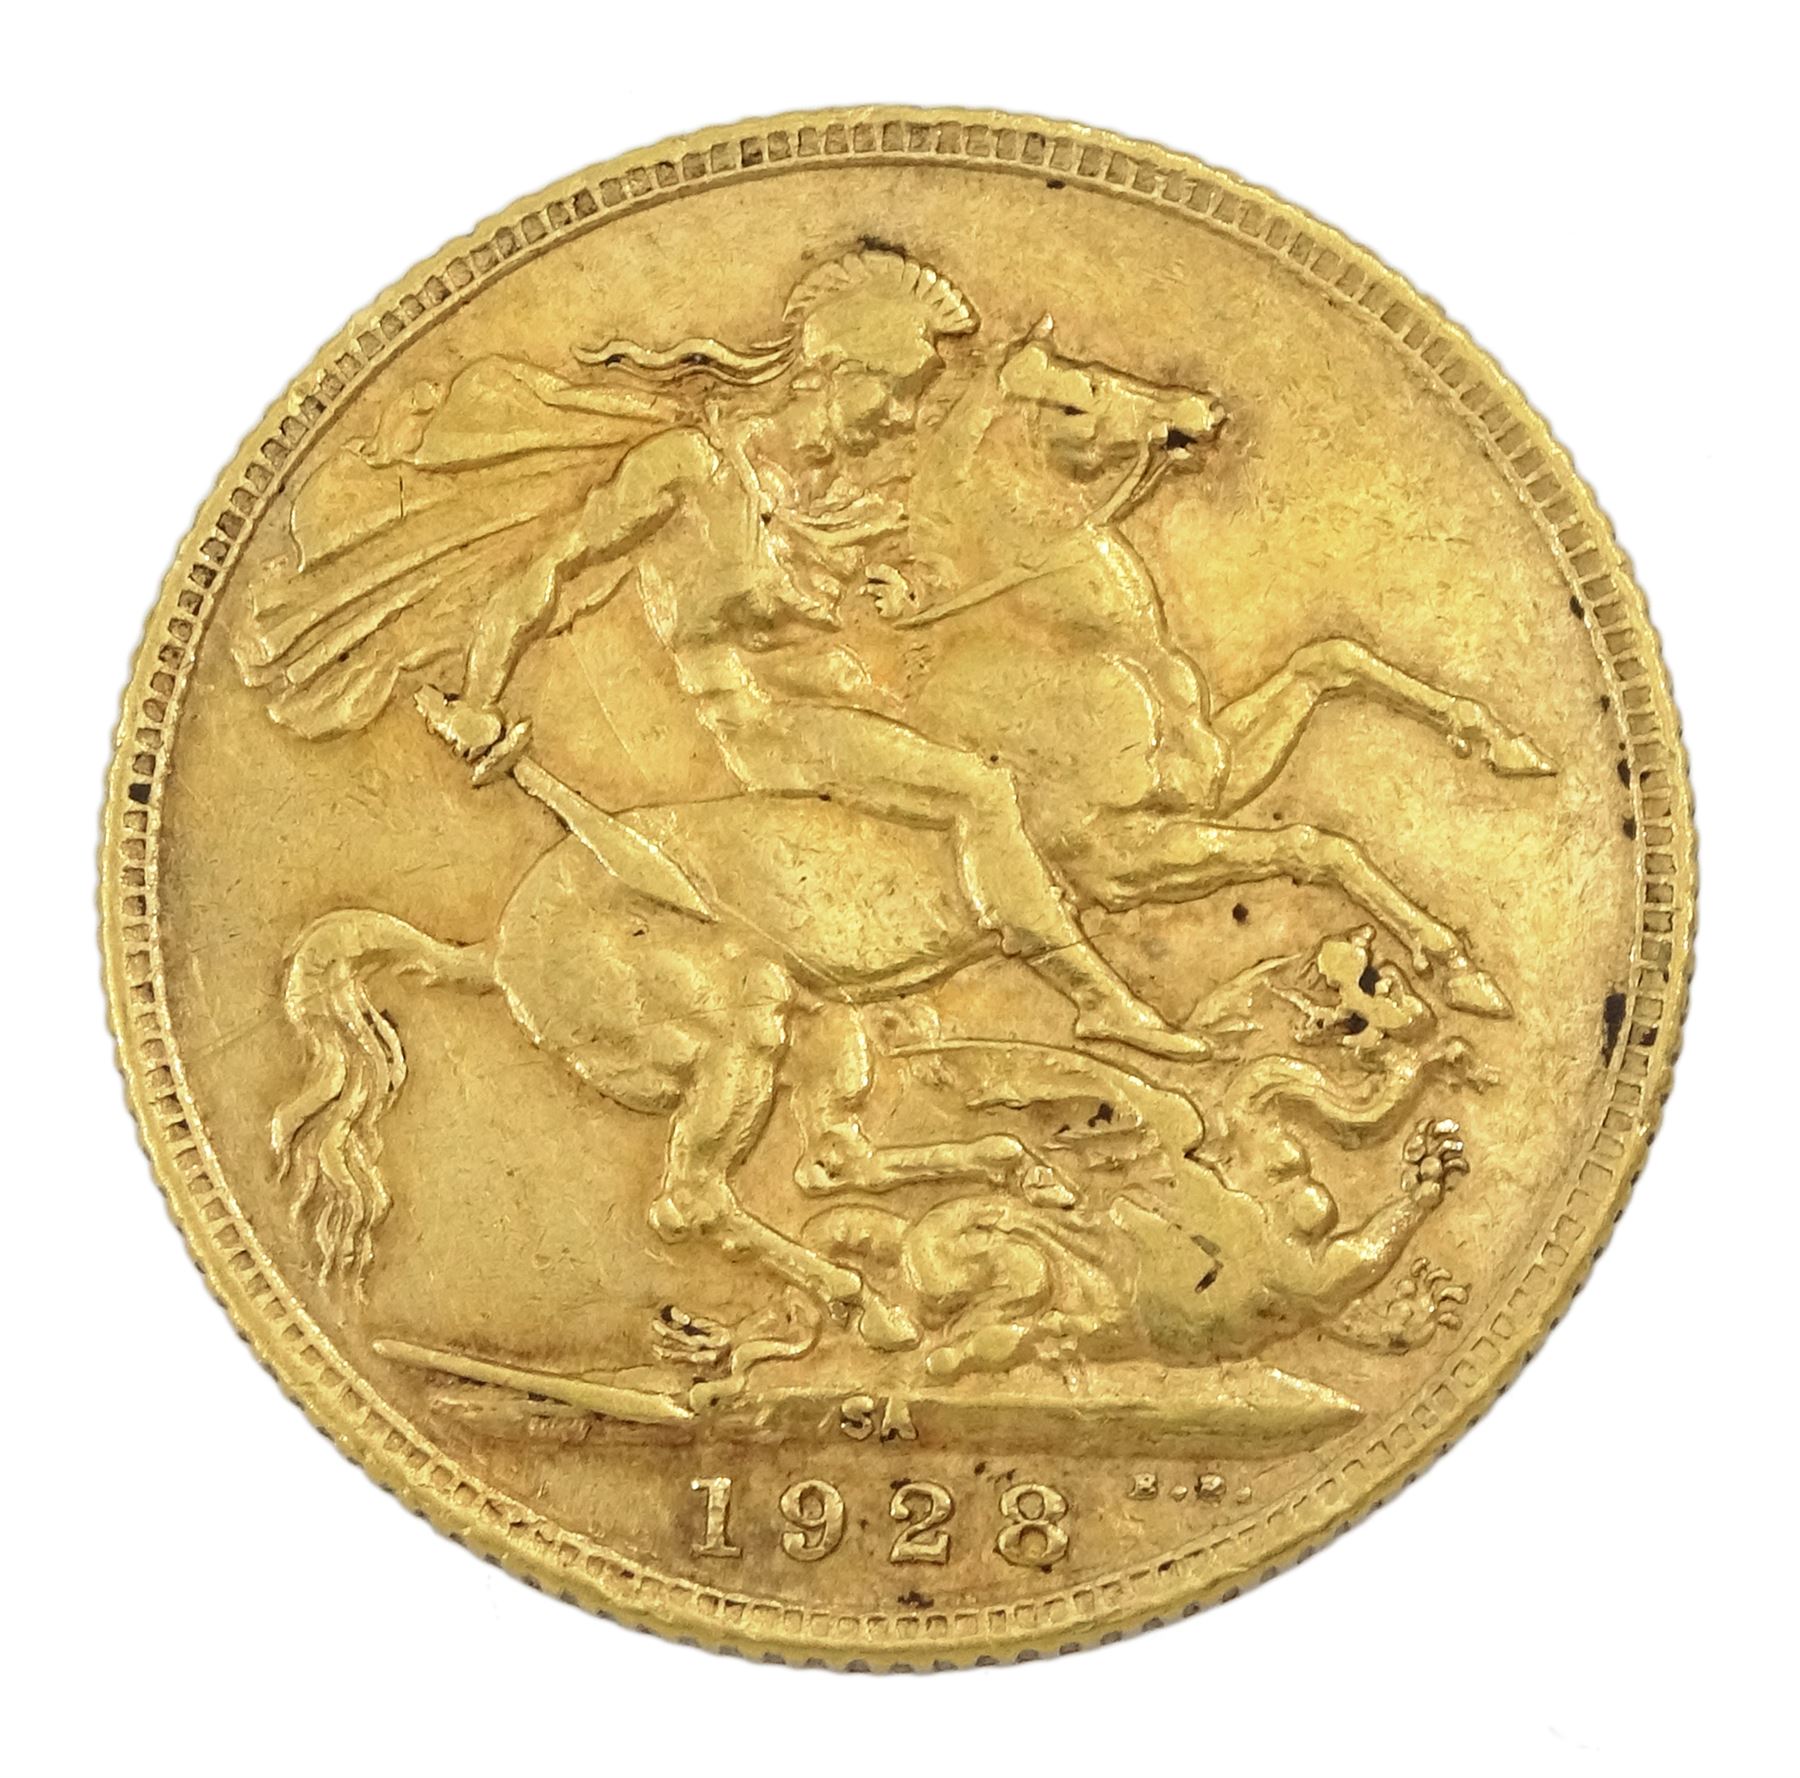 King George V 1928 gold full sovereign coin - Image 2 of 2